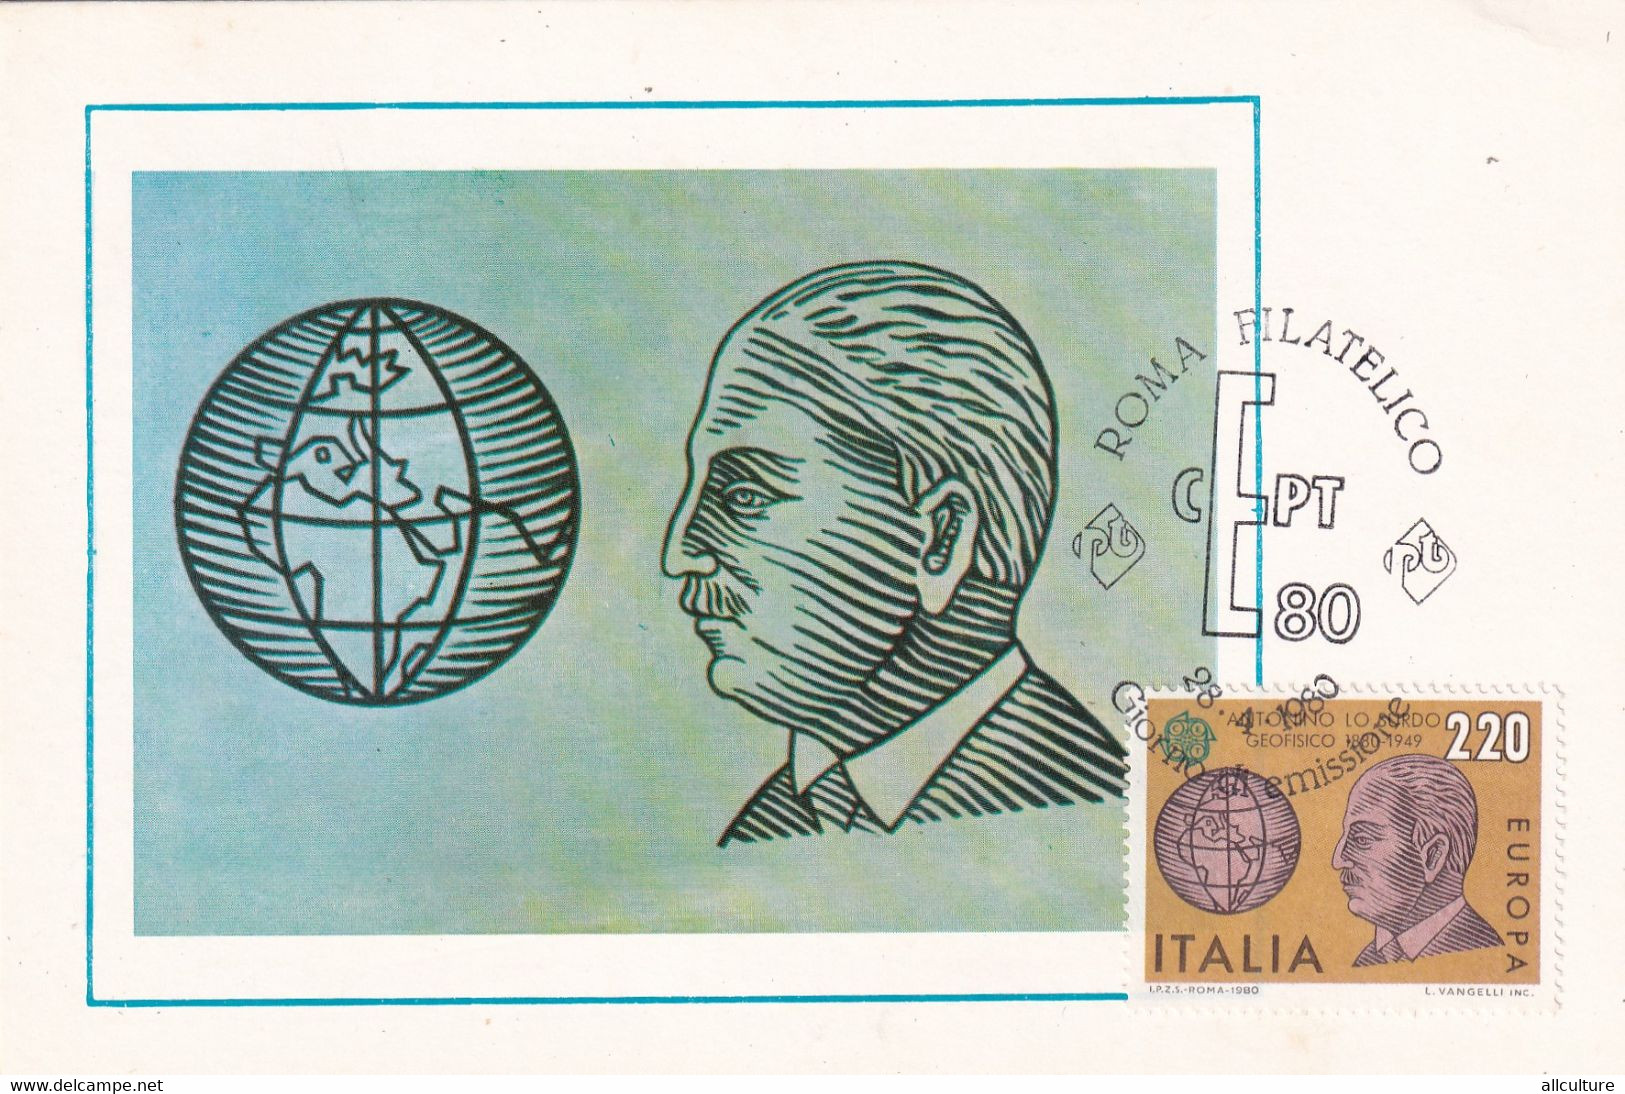 A10908- ANTONINO LO SURDO, GEOPHYSICAL, ROMA FILATELICO 1980 MAXIMUM CARD ITALIA  USED STAMPS - Cartas Máxima